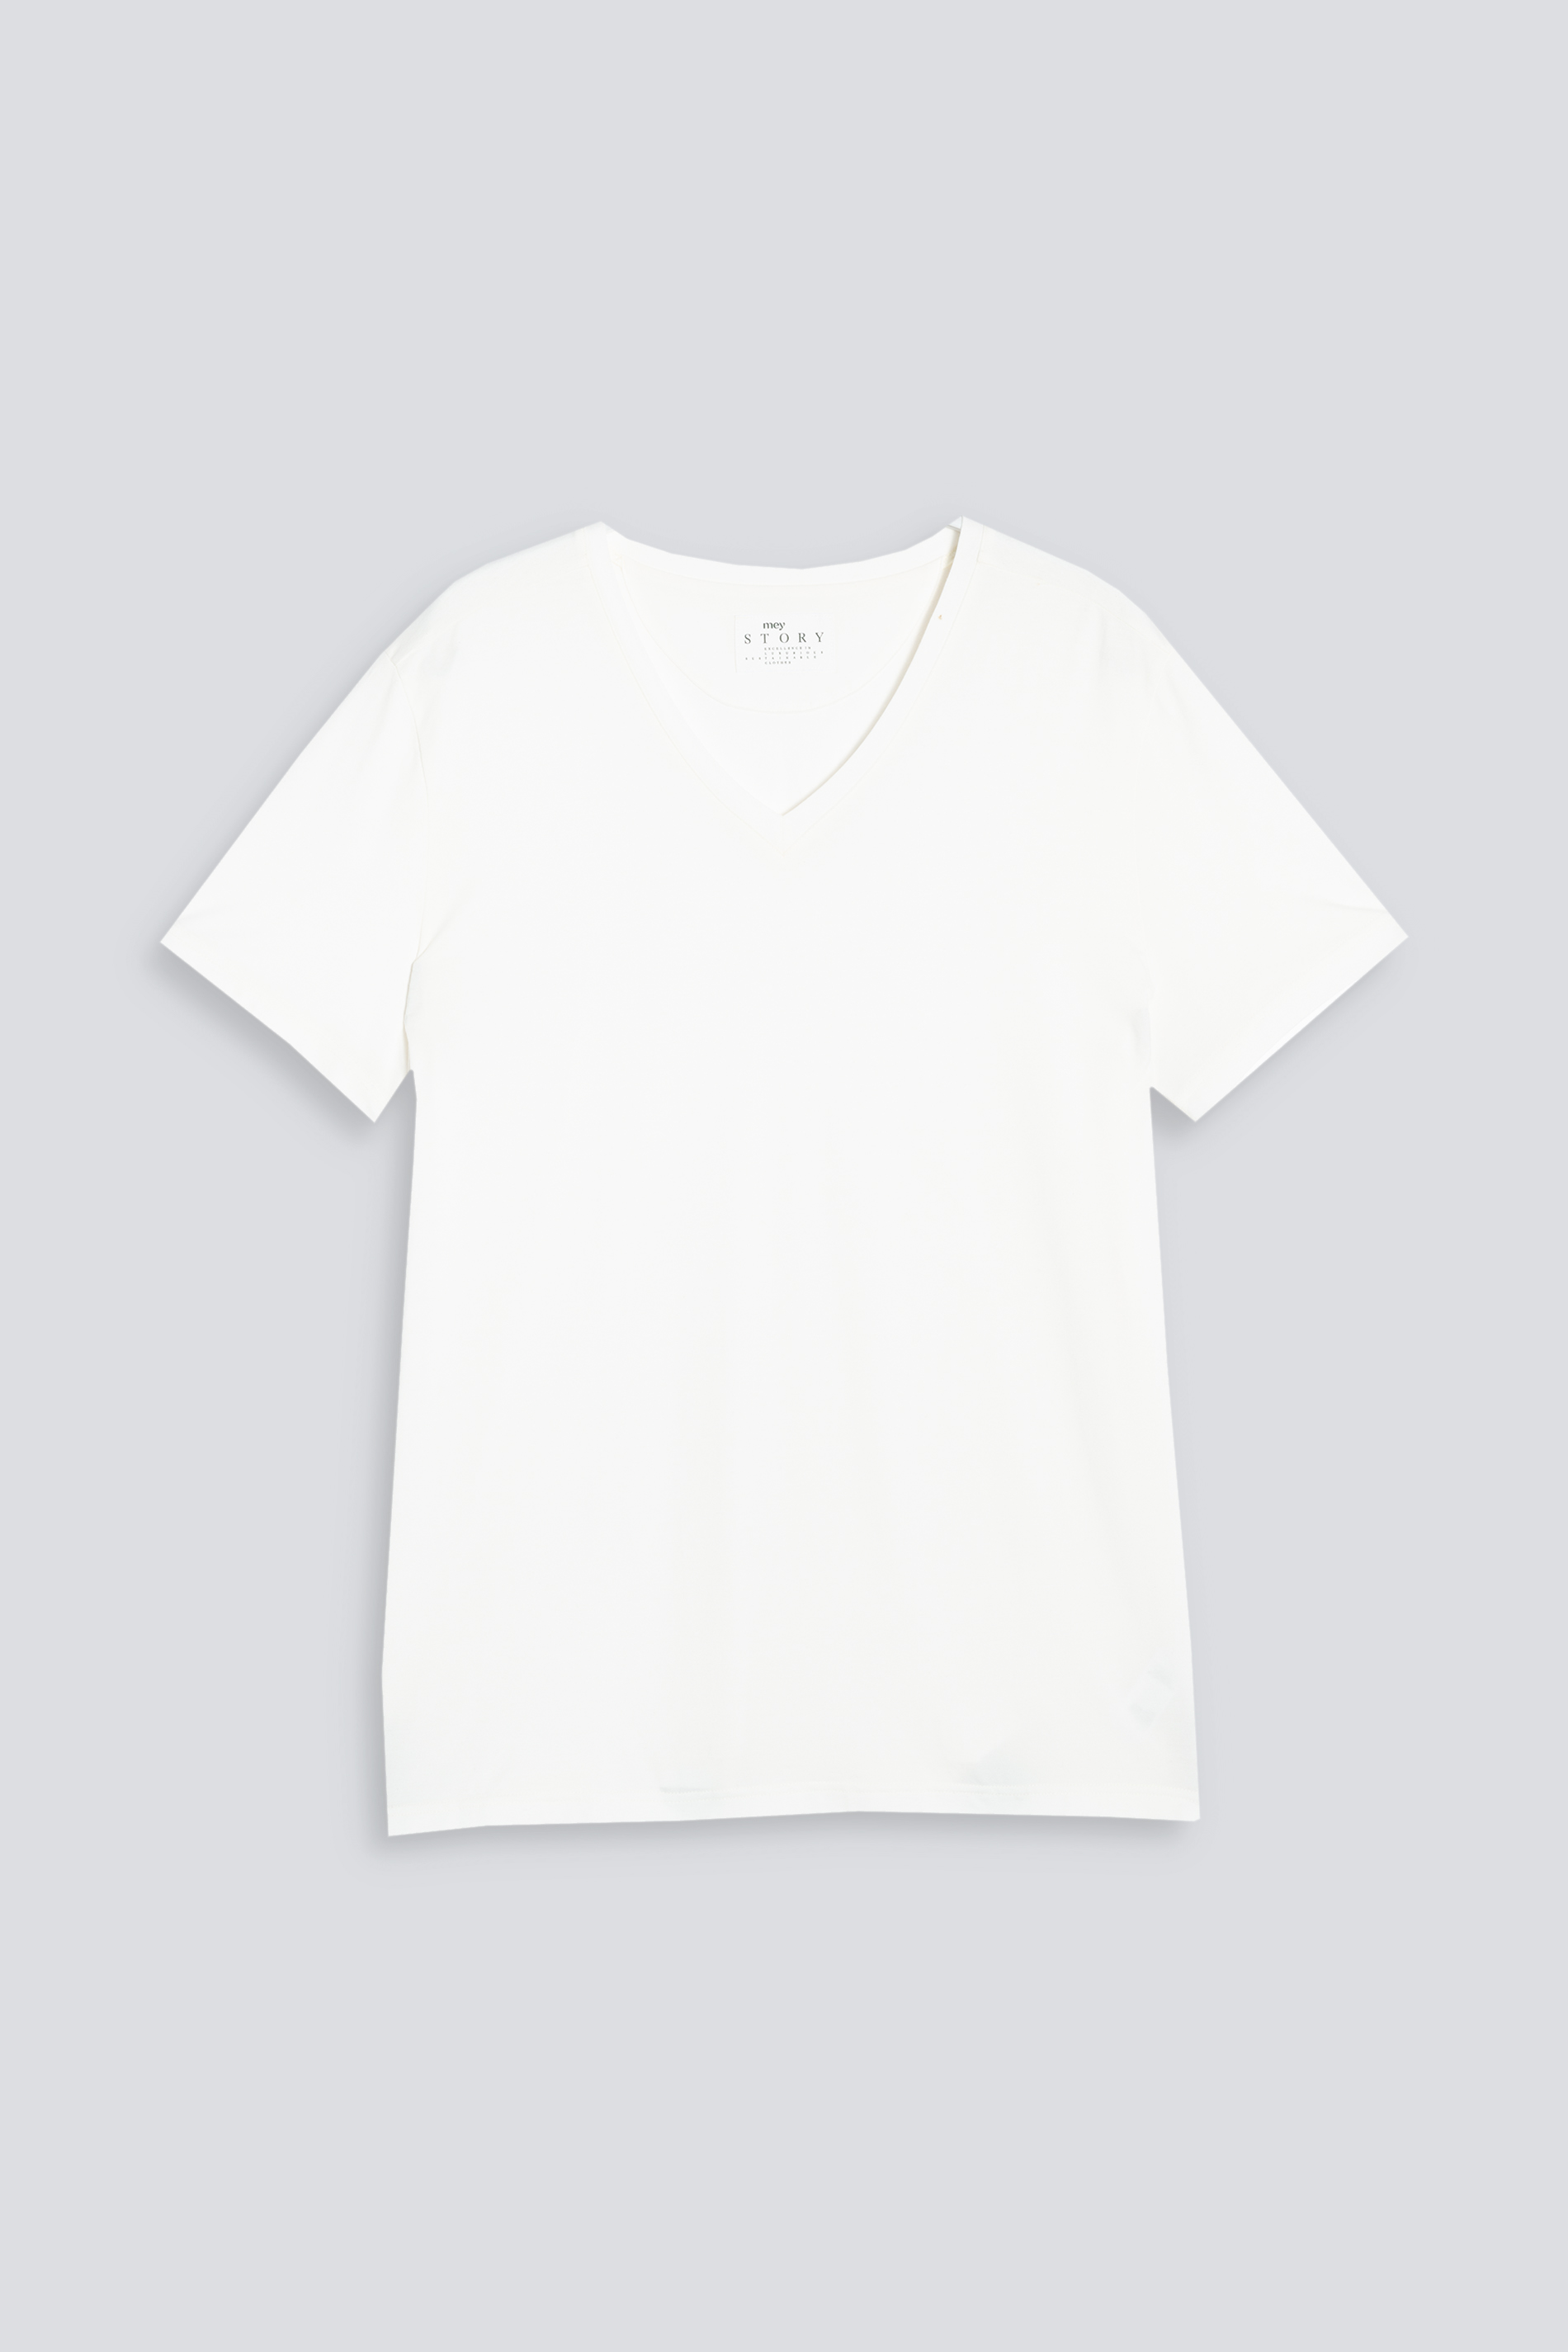 V-neck T-shirt Whisper White Serie Magila Singola Front View | mey®